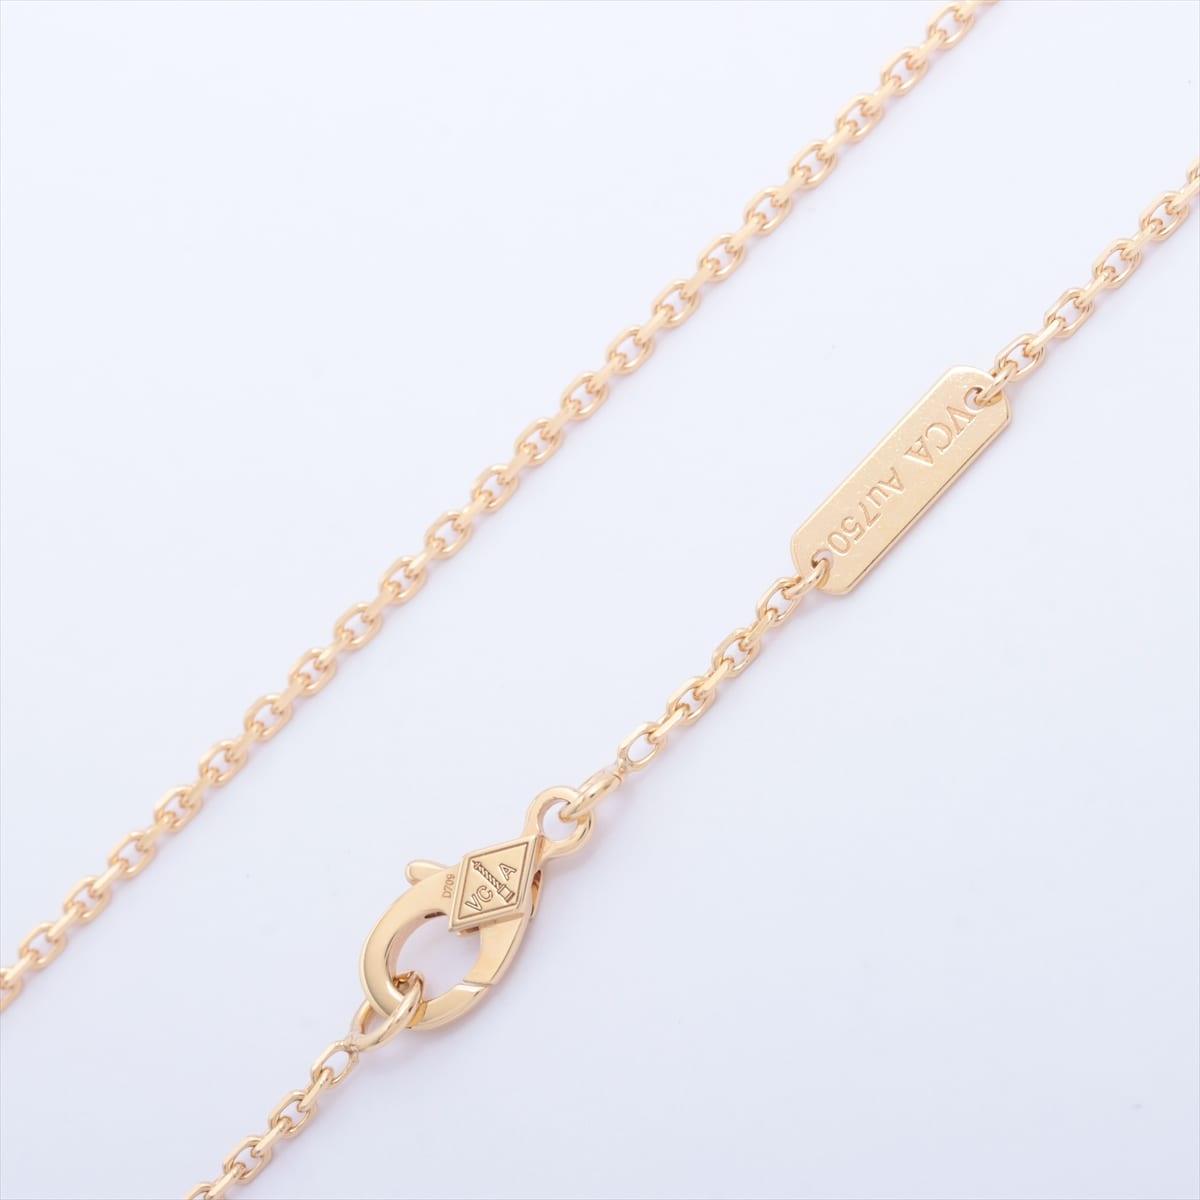 Van Cleef & Arpels Vintage Alhambra Golden shell diamond Necklace 750 YG 6.4g Limited to 2018